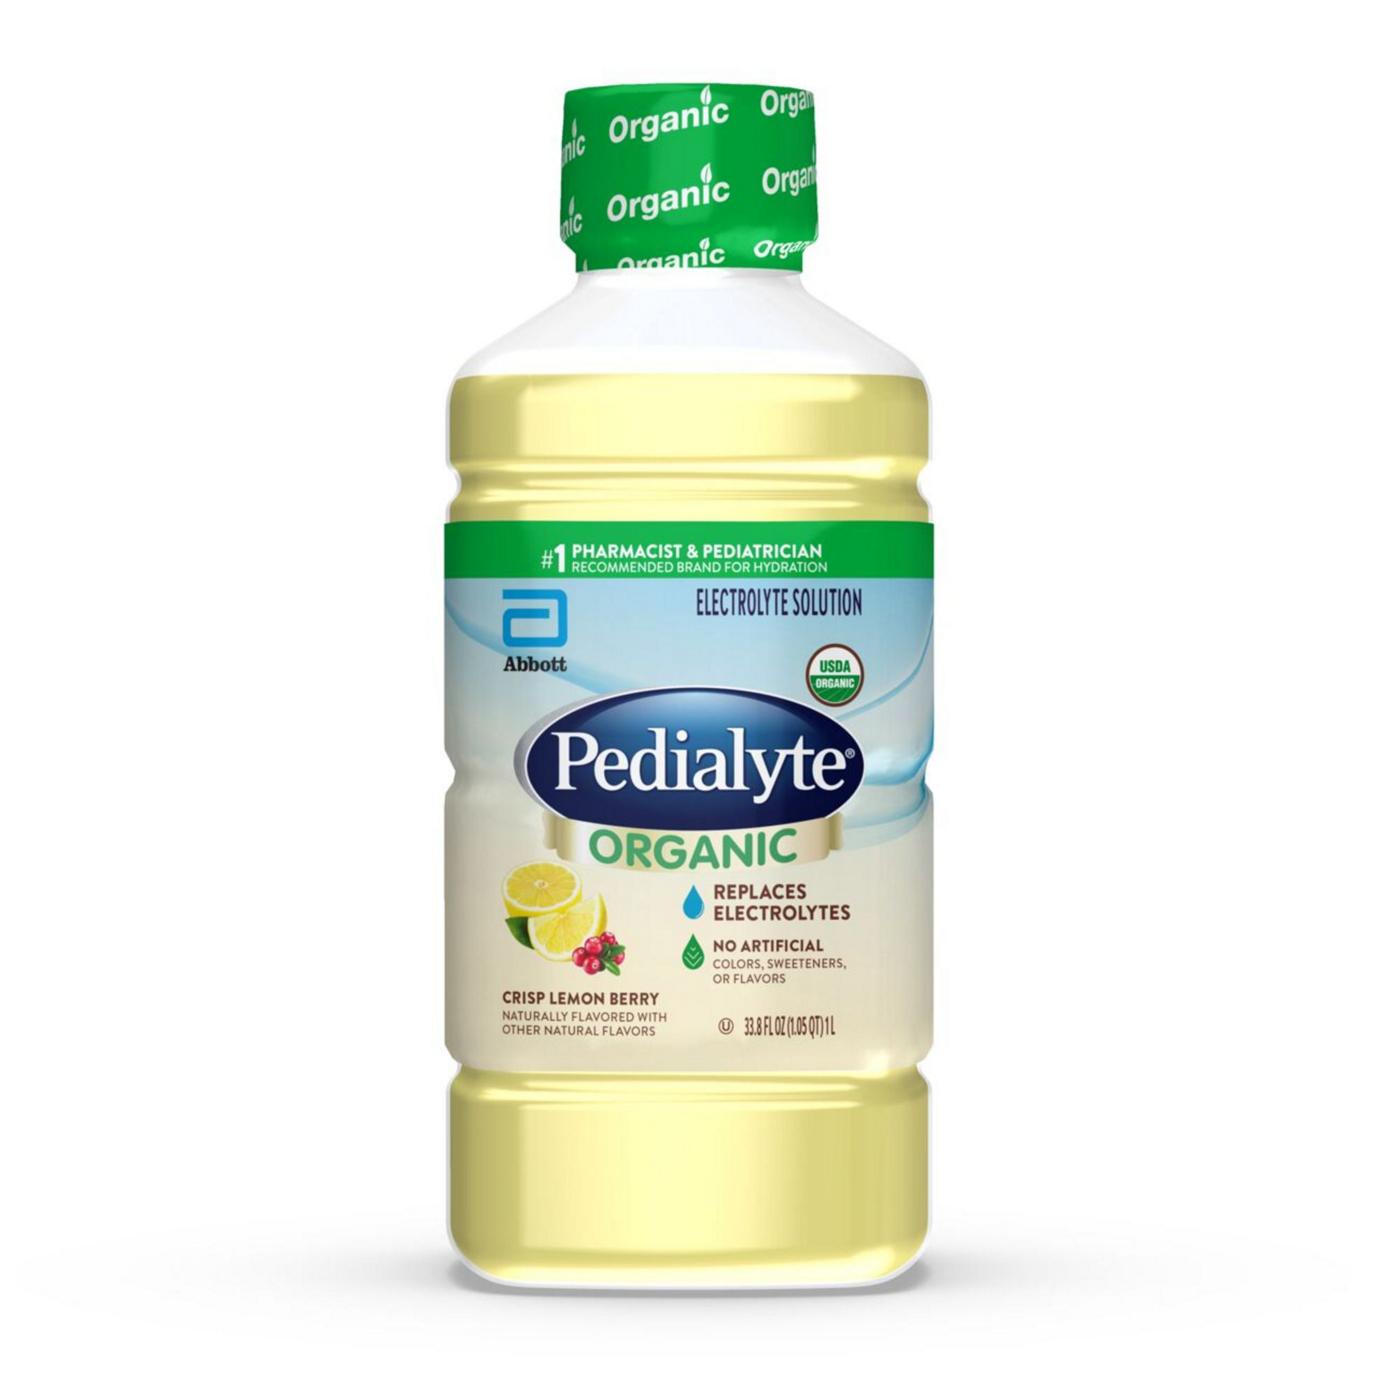 Pedialyte Organic Electrolyte Solution - Crisp Lemon Berry; image 1 of 9